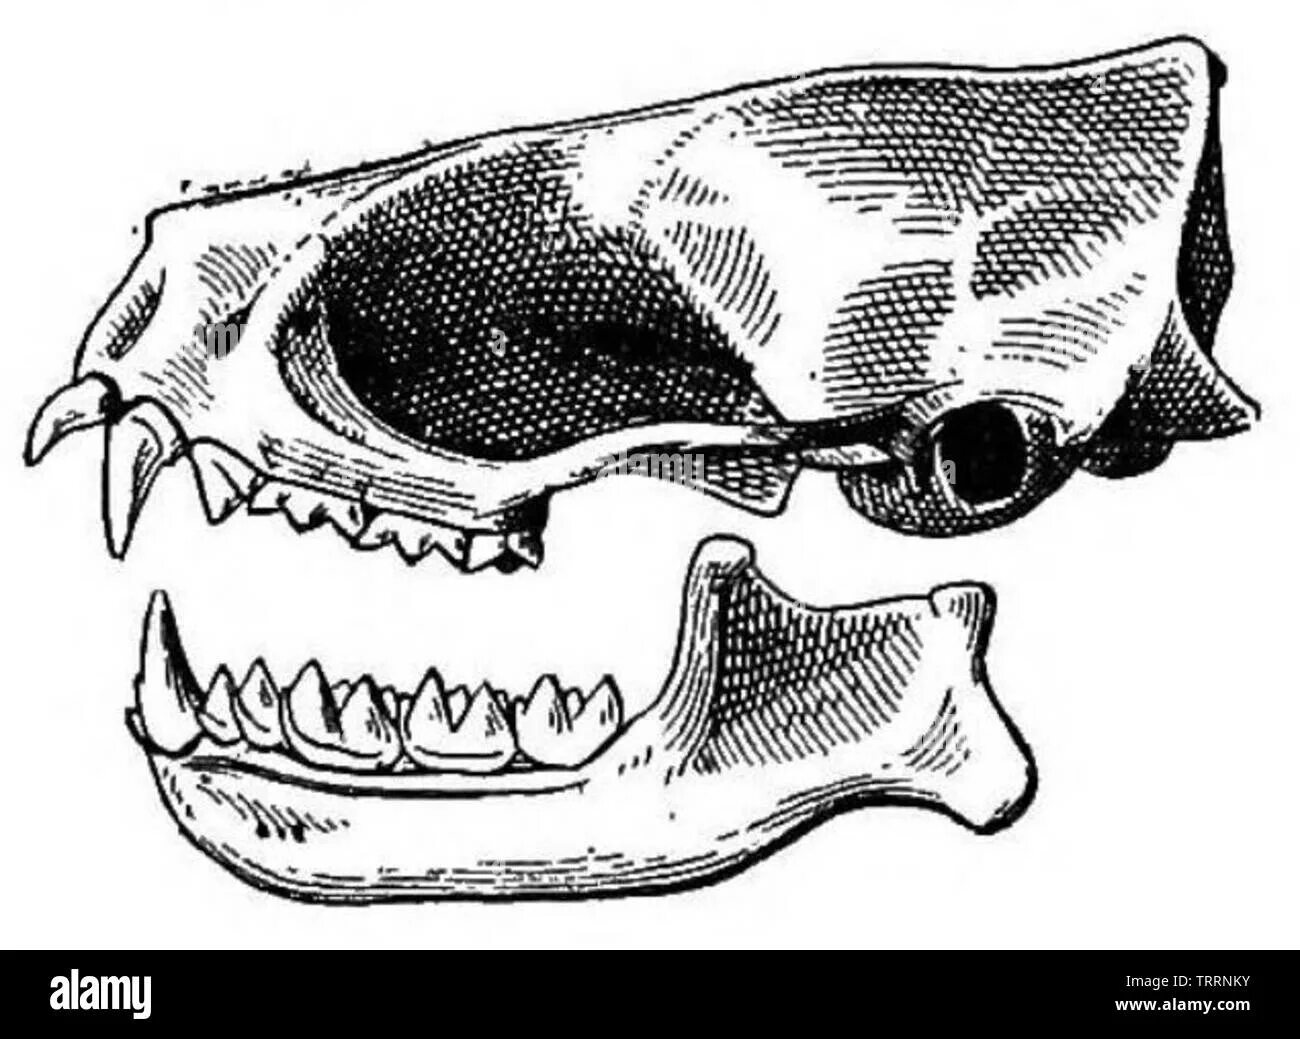 Зубная формула рукокрылых. Череп отряда рукокрылые. Череп рукокрылых млекопитающих. Зубная система рукокрылых млекопитающих. Череп рукокрылых зубная формула.